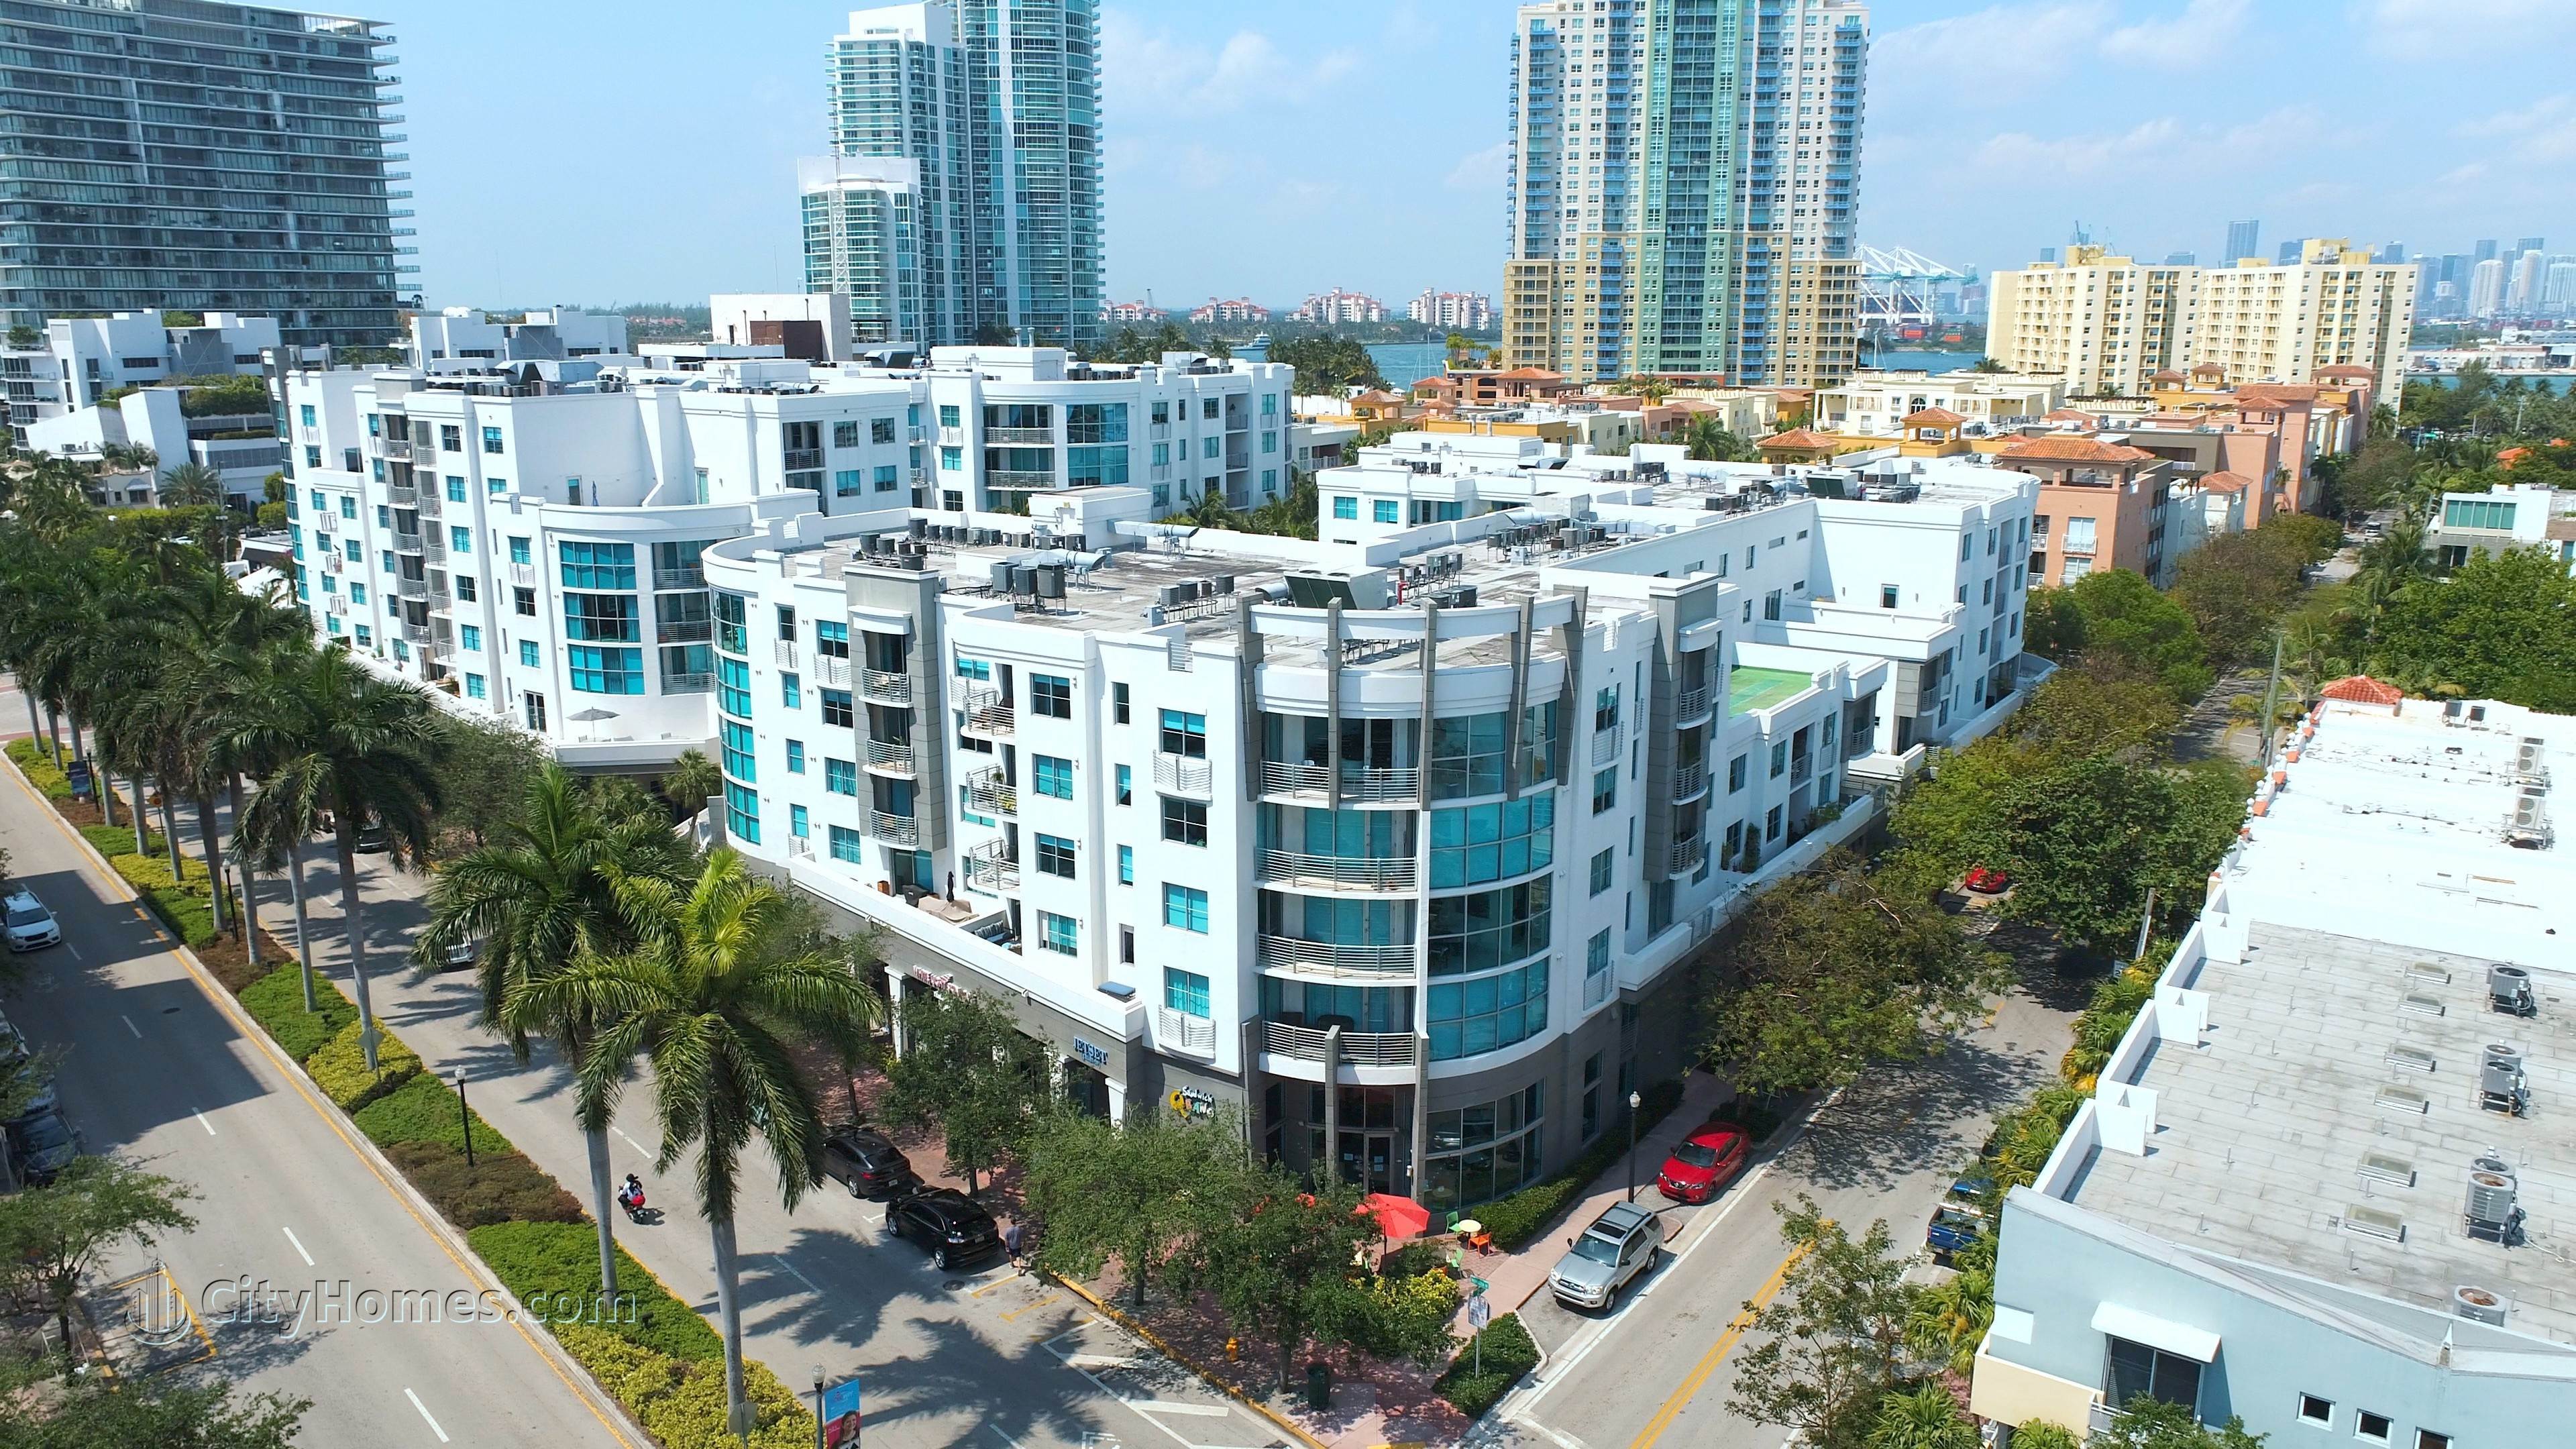 110 Washington Ave, South of Fifth, Miami Beach, FL 33139에 COSMOPOLITAN TOWERS 건물